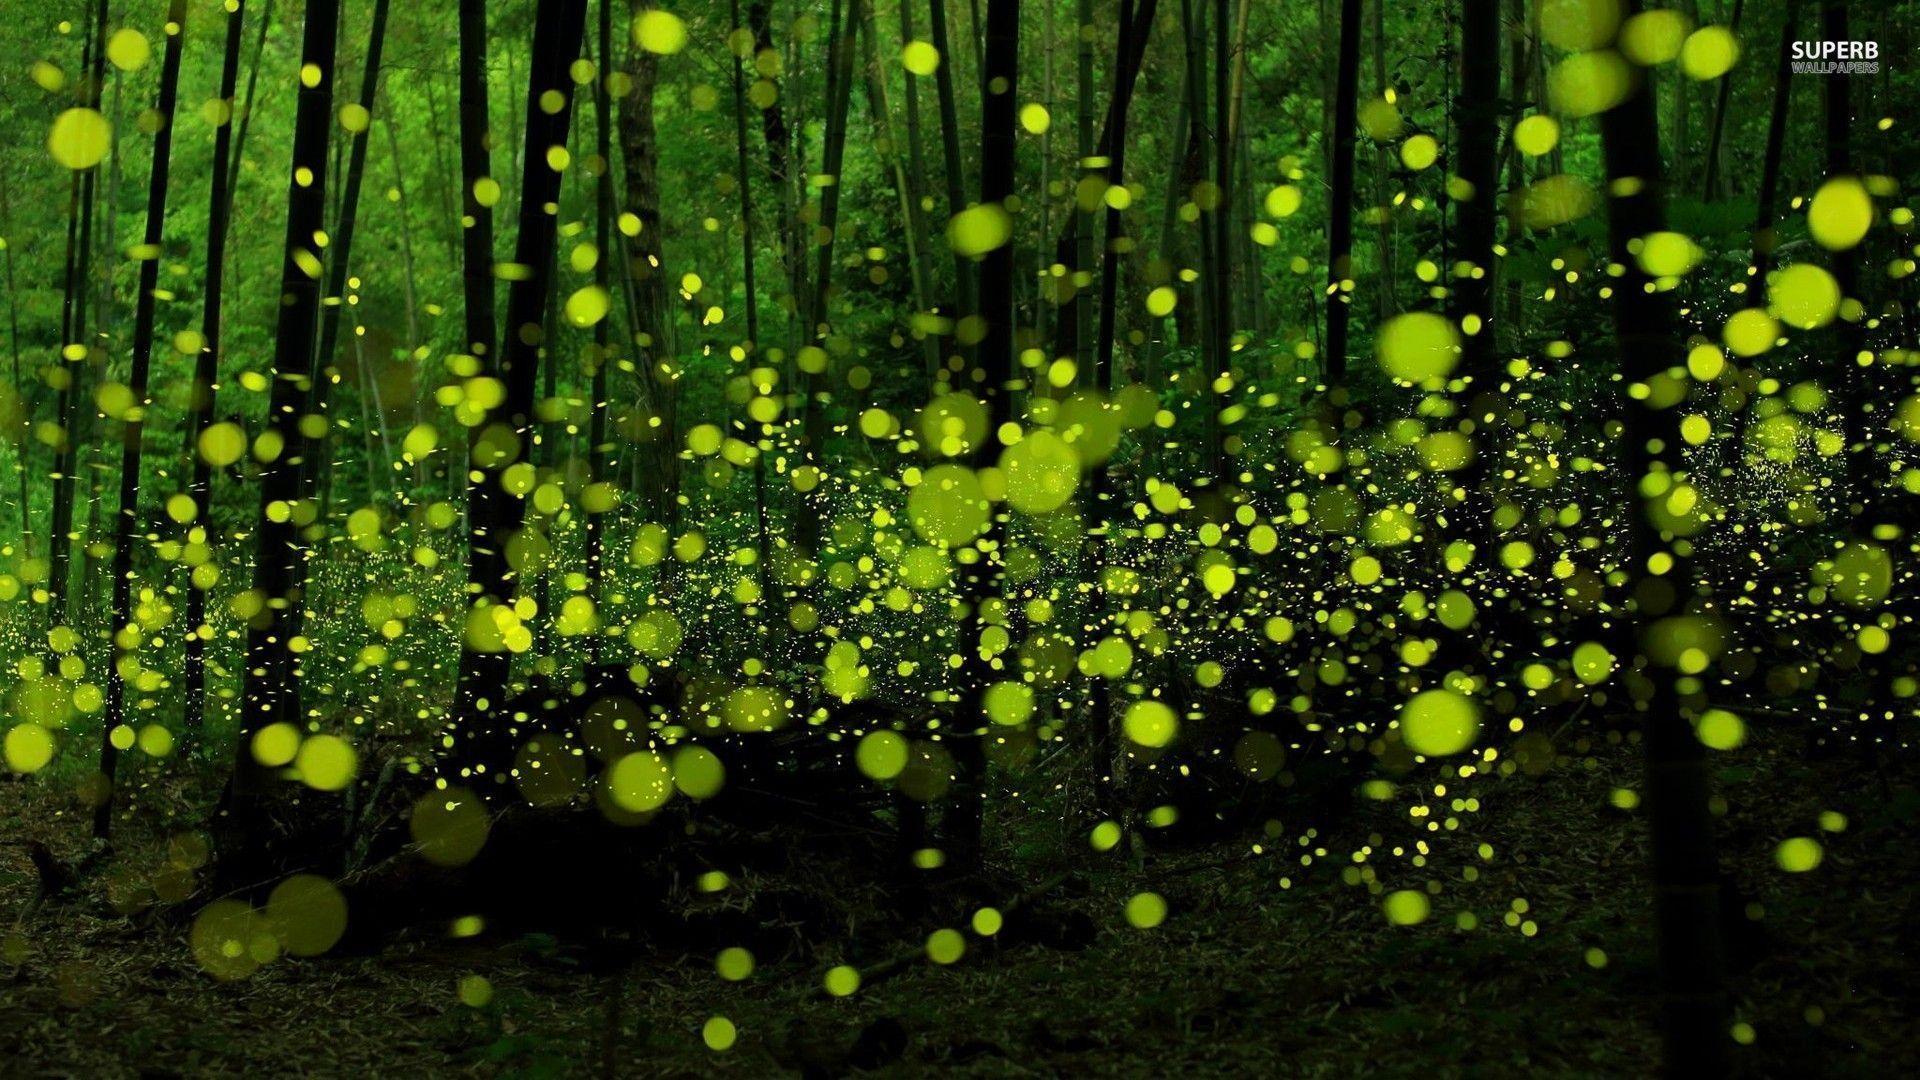 Fireflies Wallpaper For Your Desktop